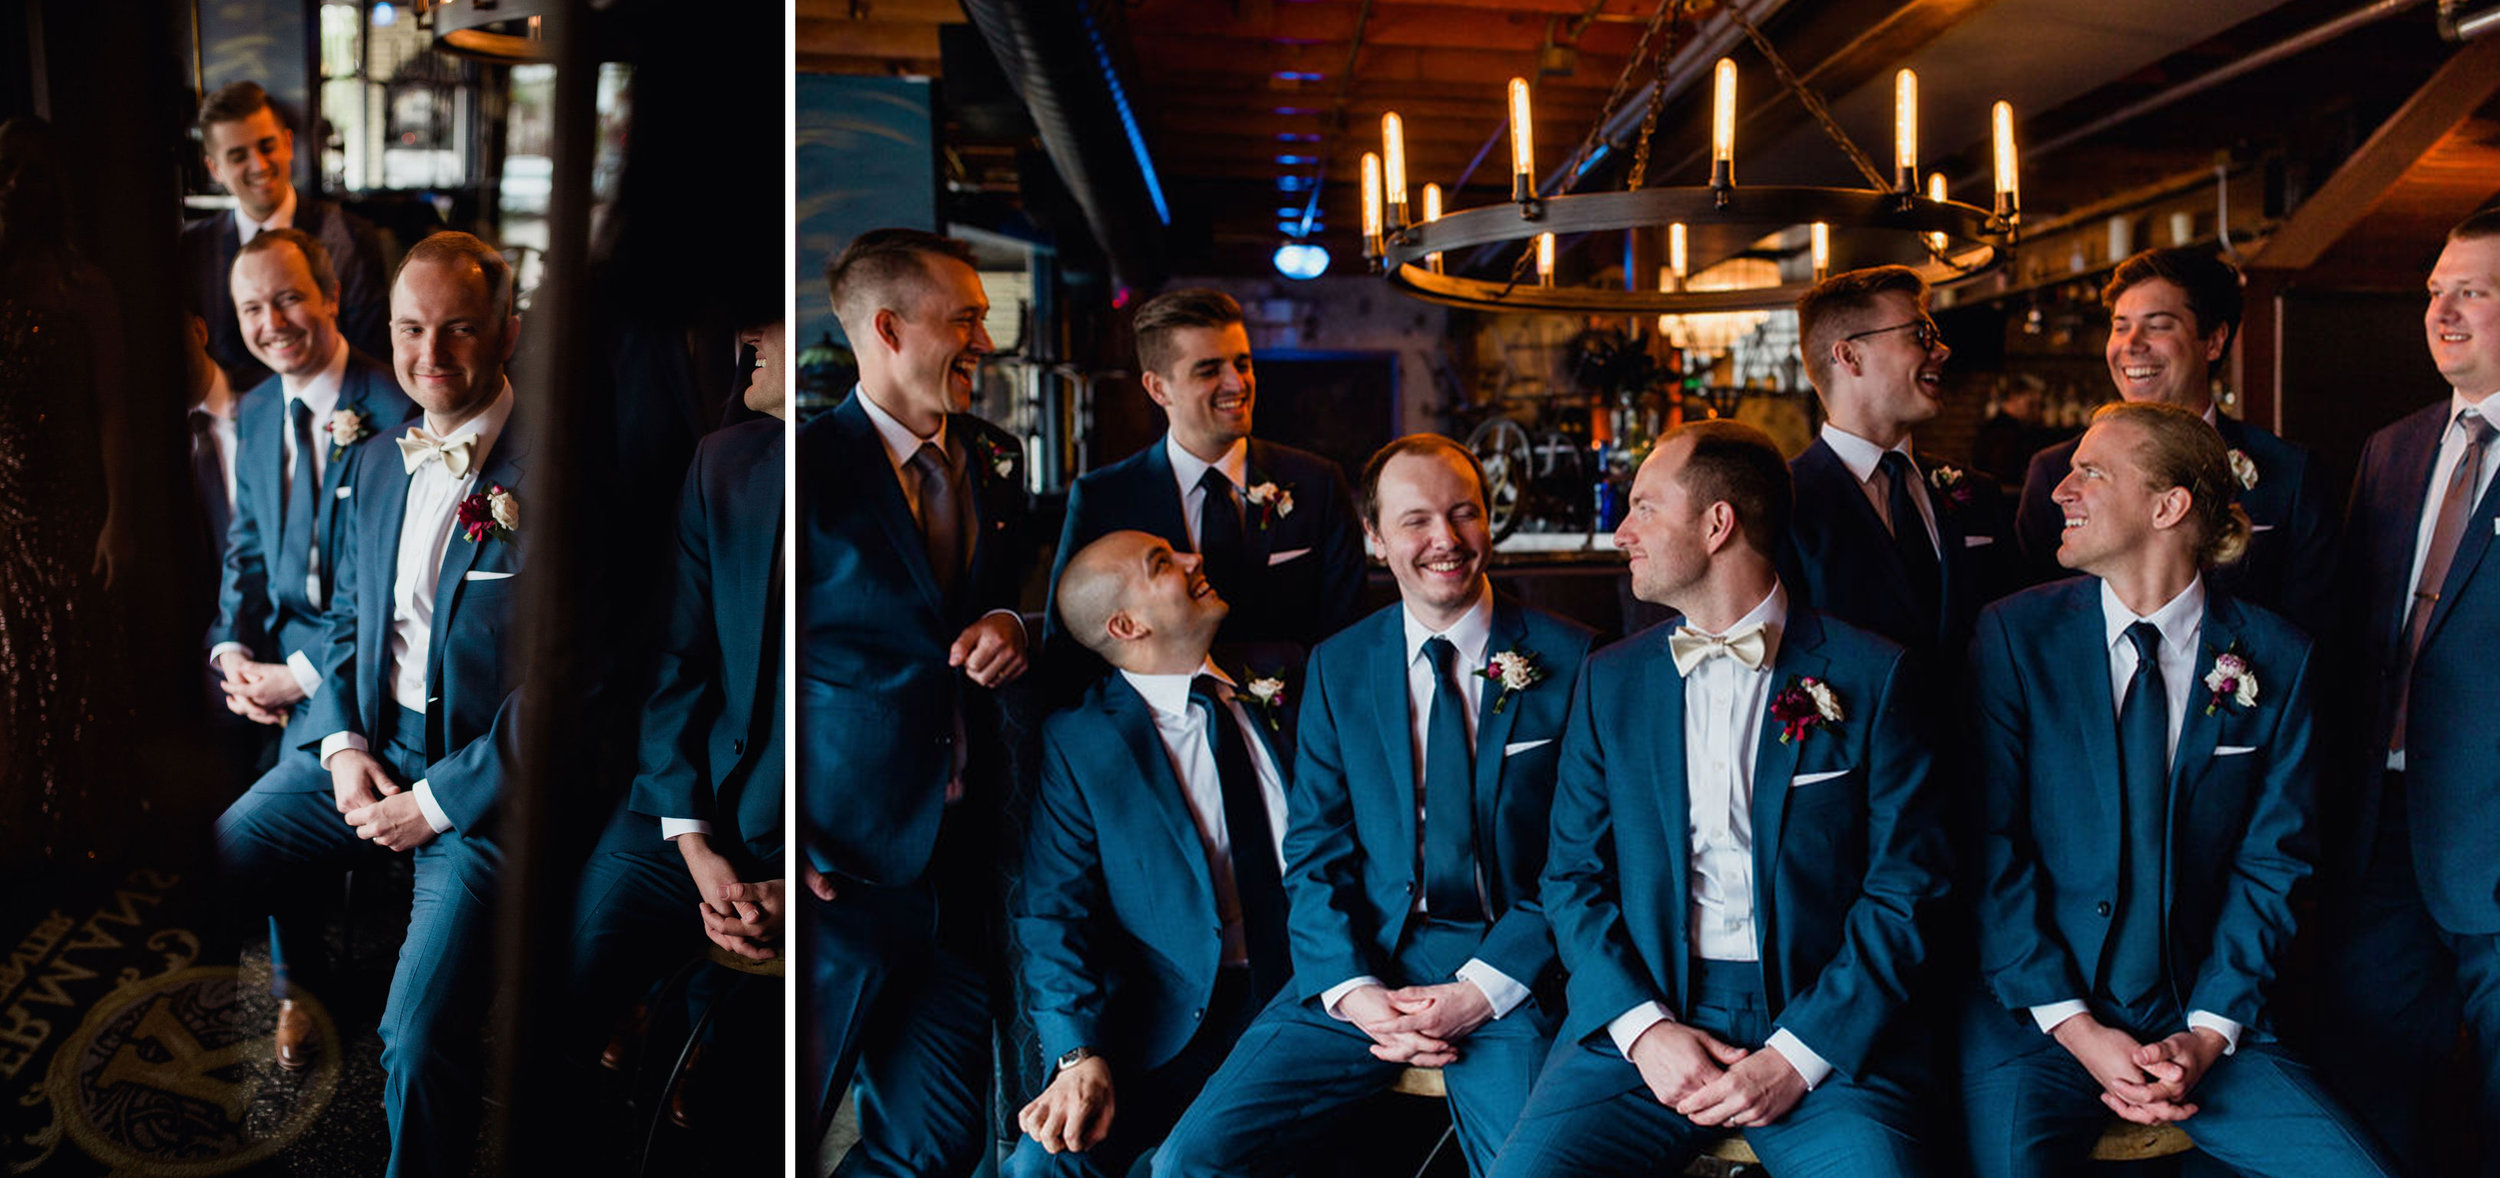 27 grooms men best man first look rachel desjardins studio wedding story telling moments photography kellermans event center minnesota.jpg